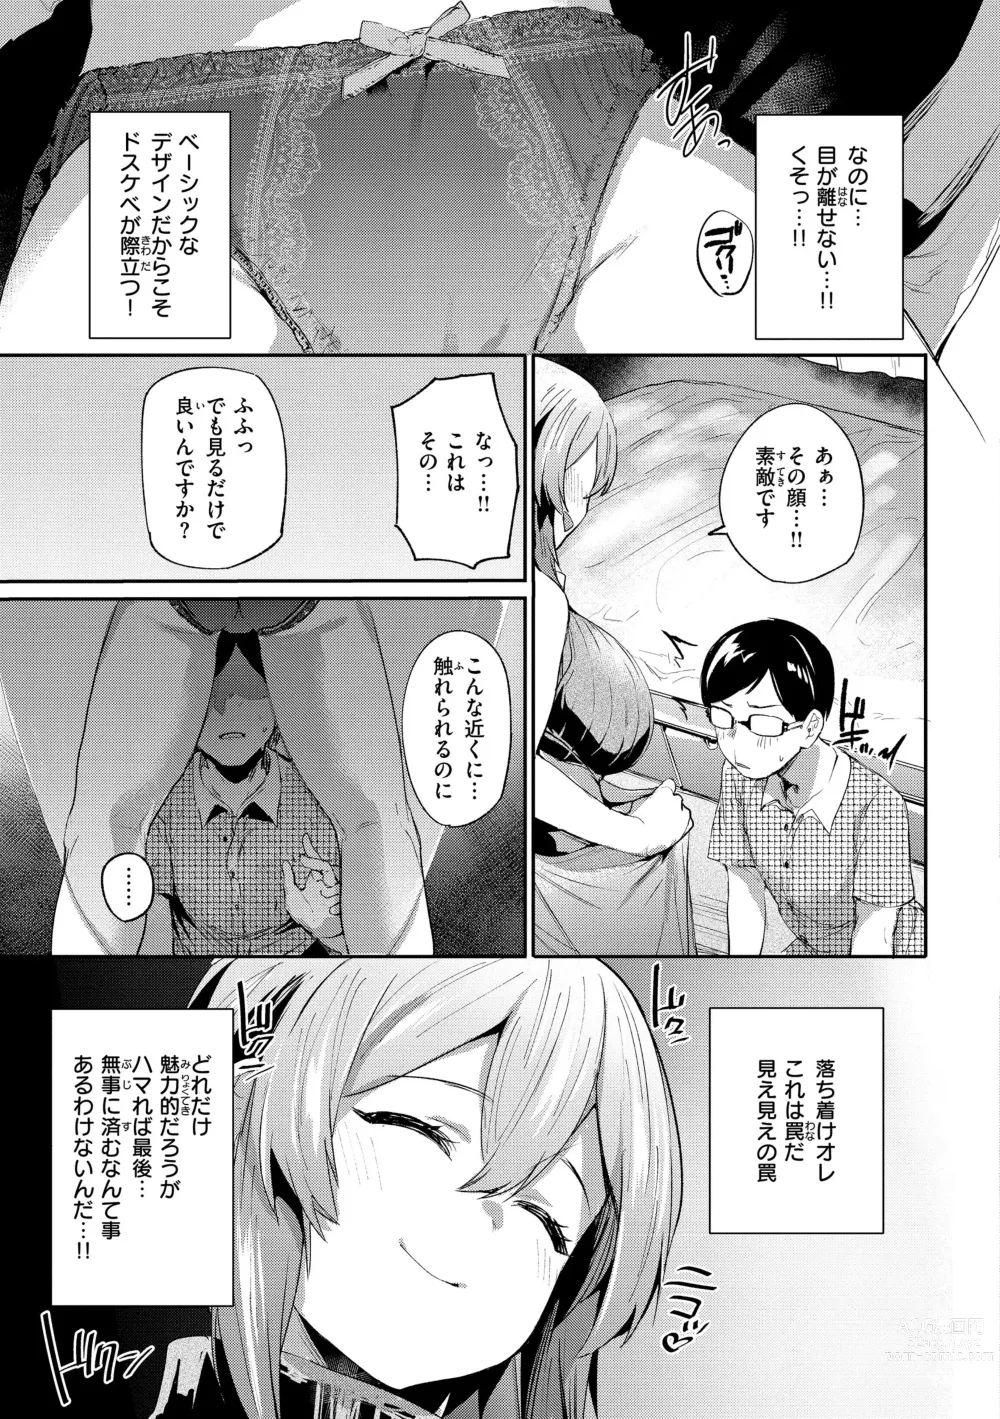 Page 11 of manga Immoral Mine